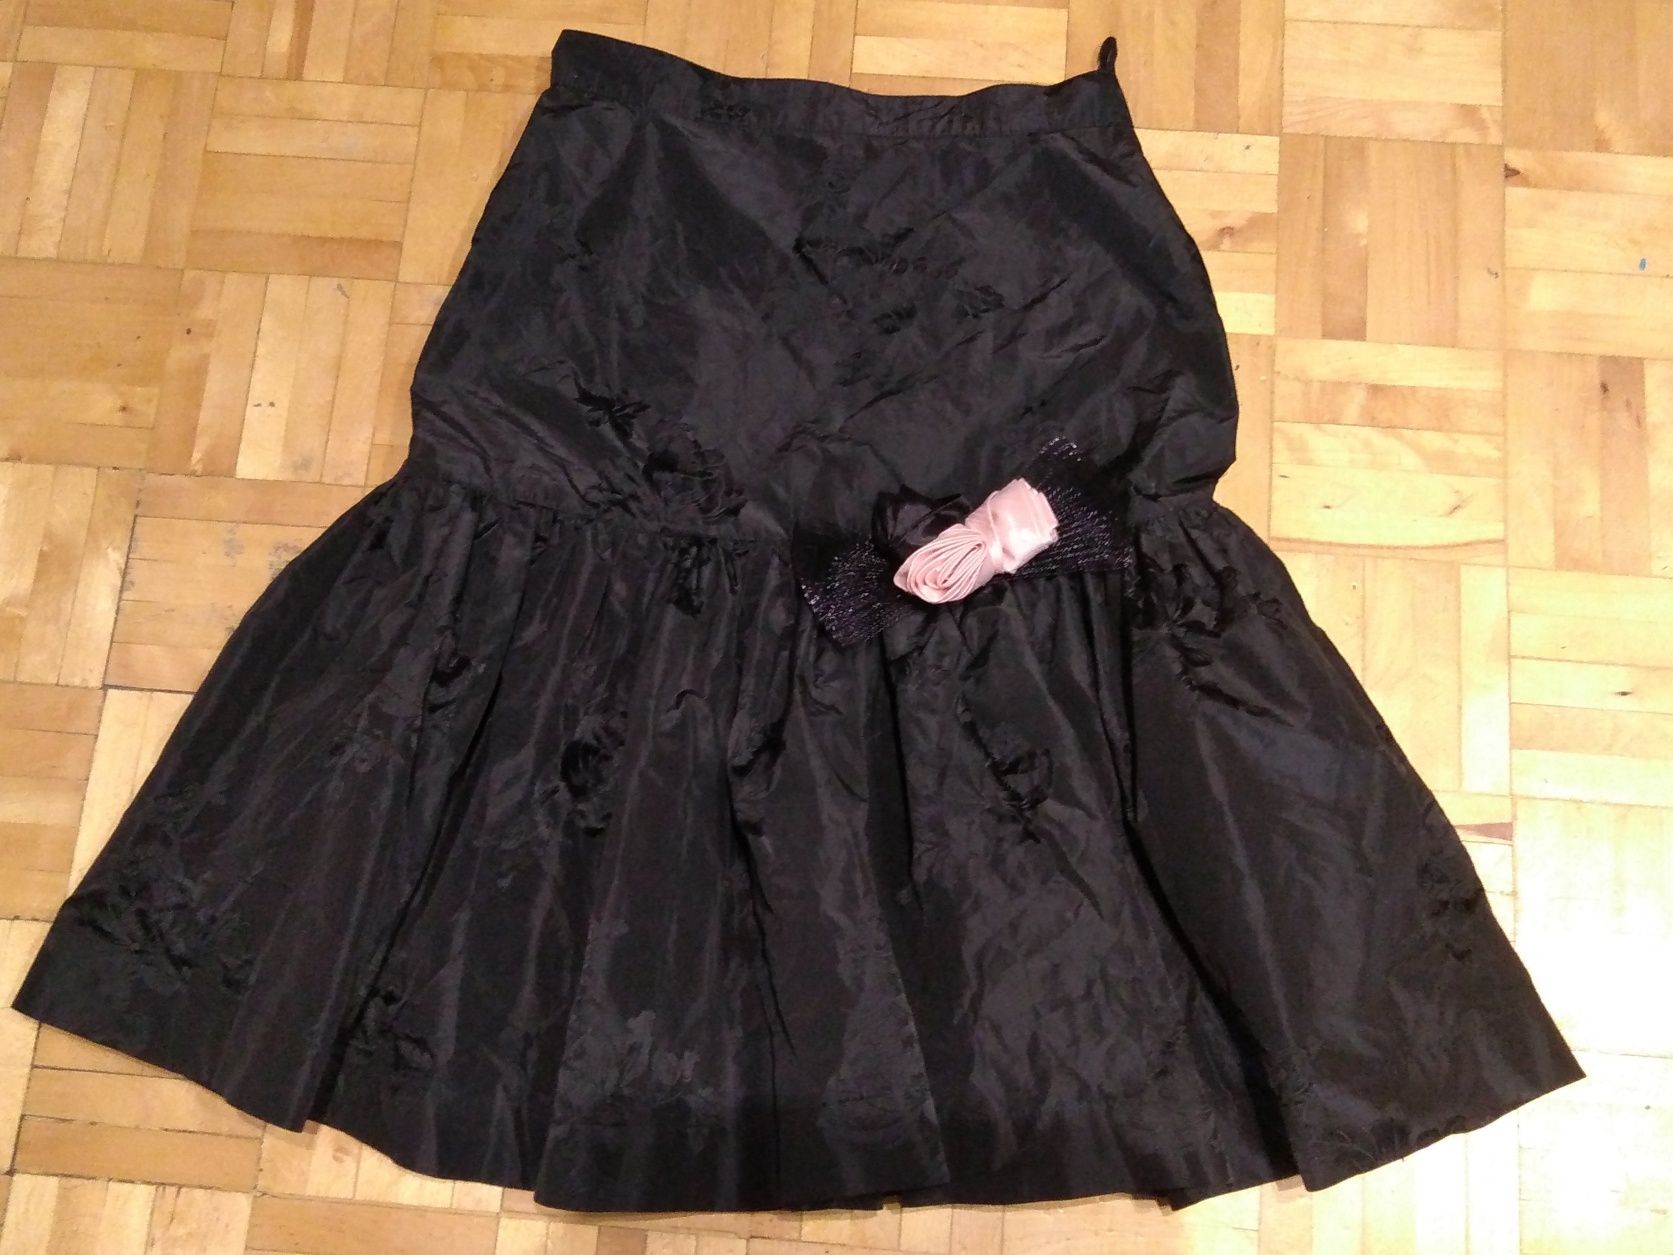 Czarna elegancka spódnica S 36 syrenka retro vintage falbana wesele